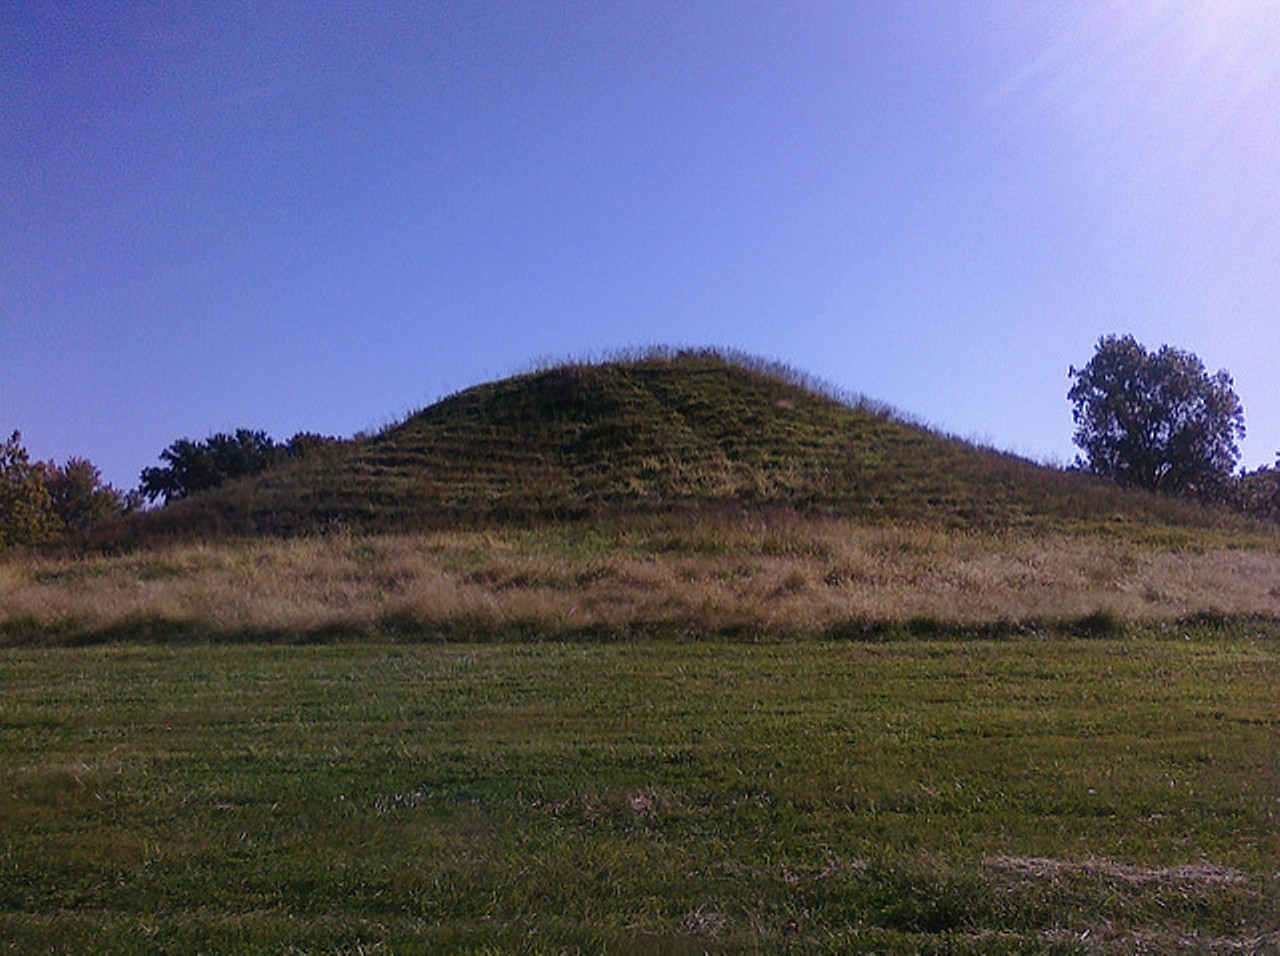 Cahokia Mounds
Jacob W, 3 stars 
"Needs more to do."